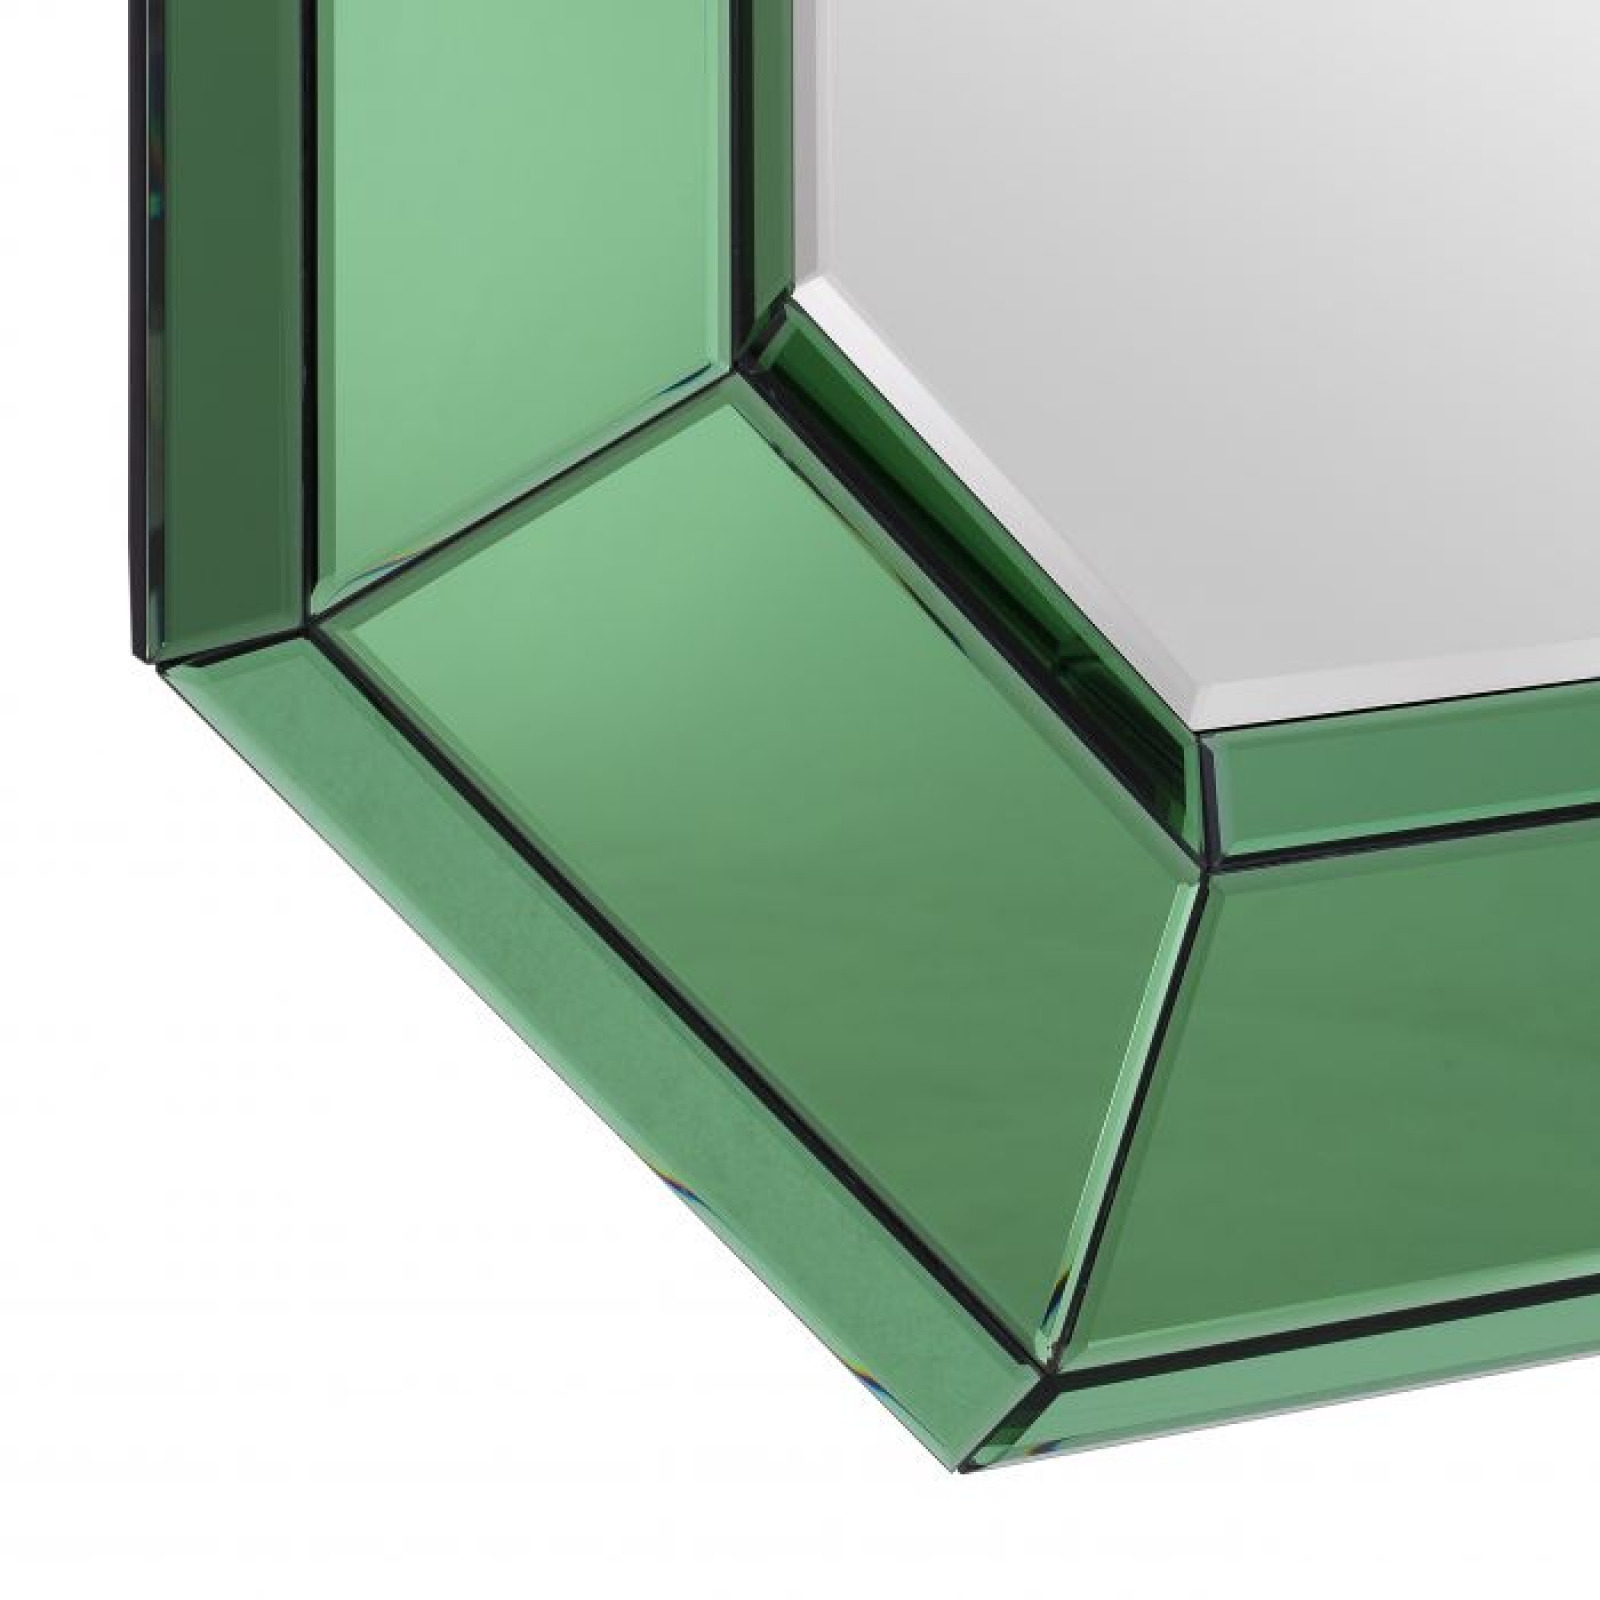 Le Sereno green mirror